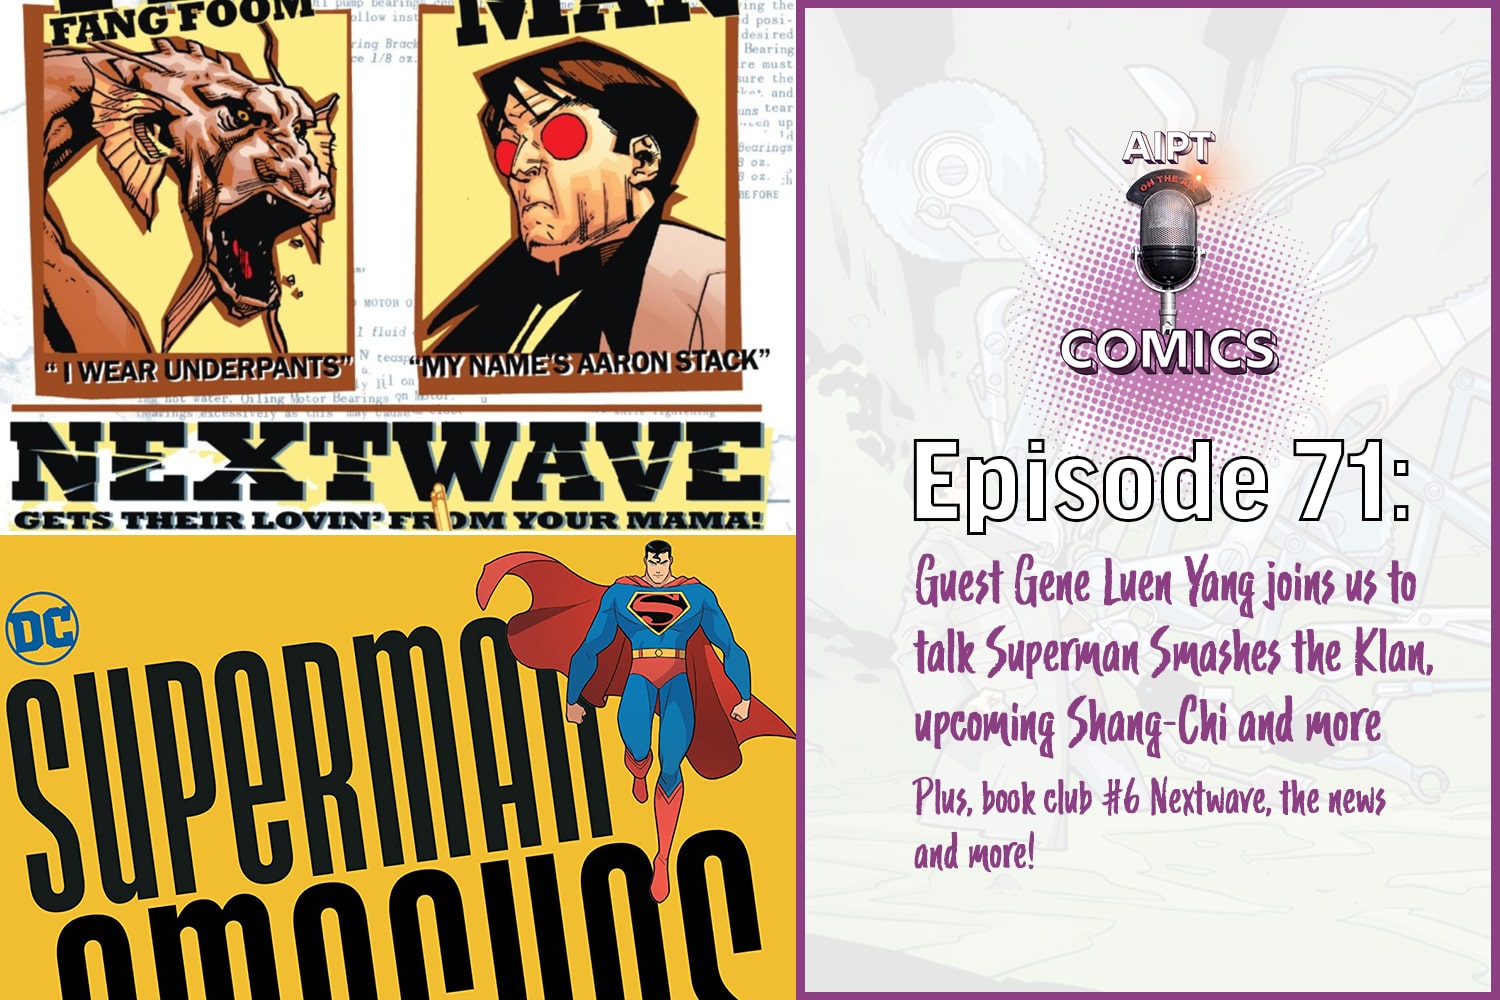 AIPT Comics Podcast episode 71: Gene Luen Yang talks the unforgettable 'Superman Smashes the Klan' and we dive into Nextwave in comic book club #6